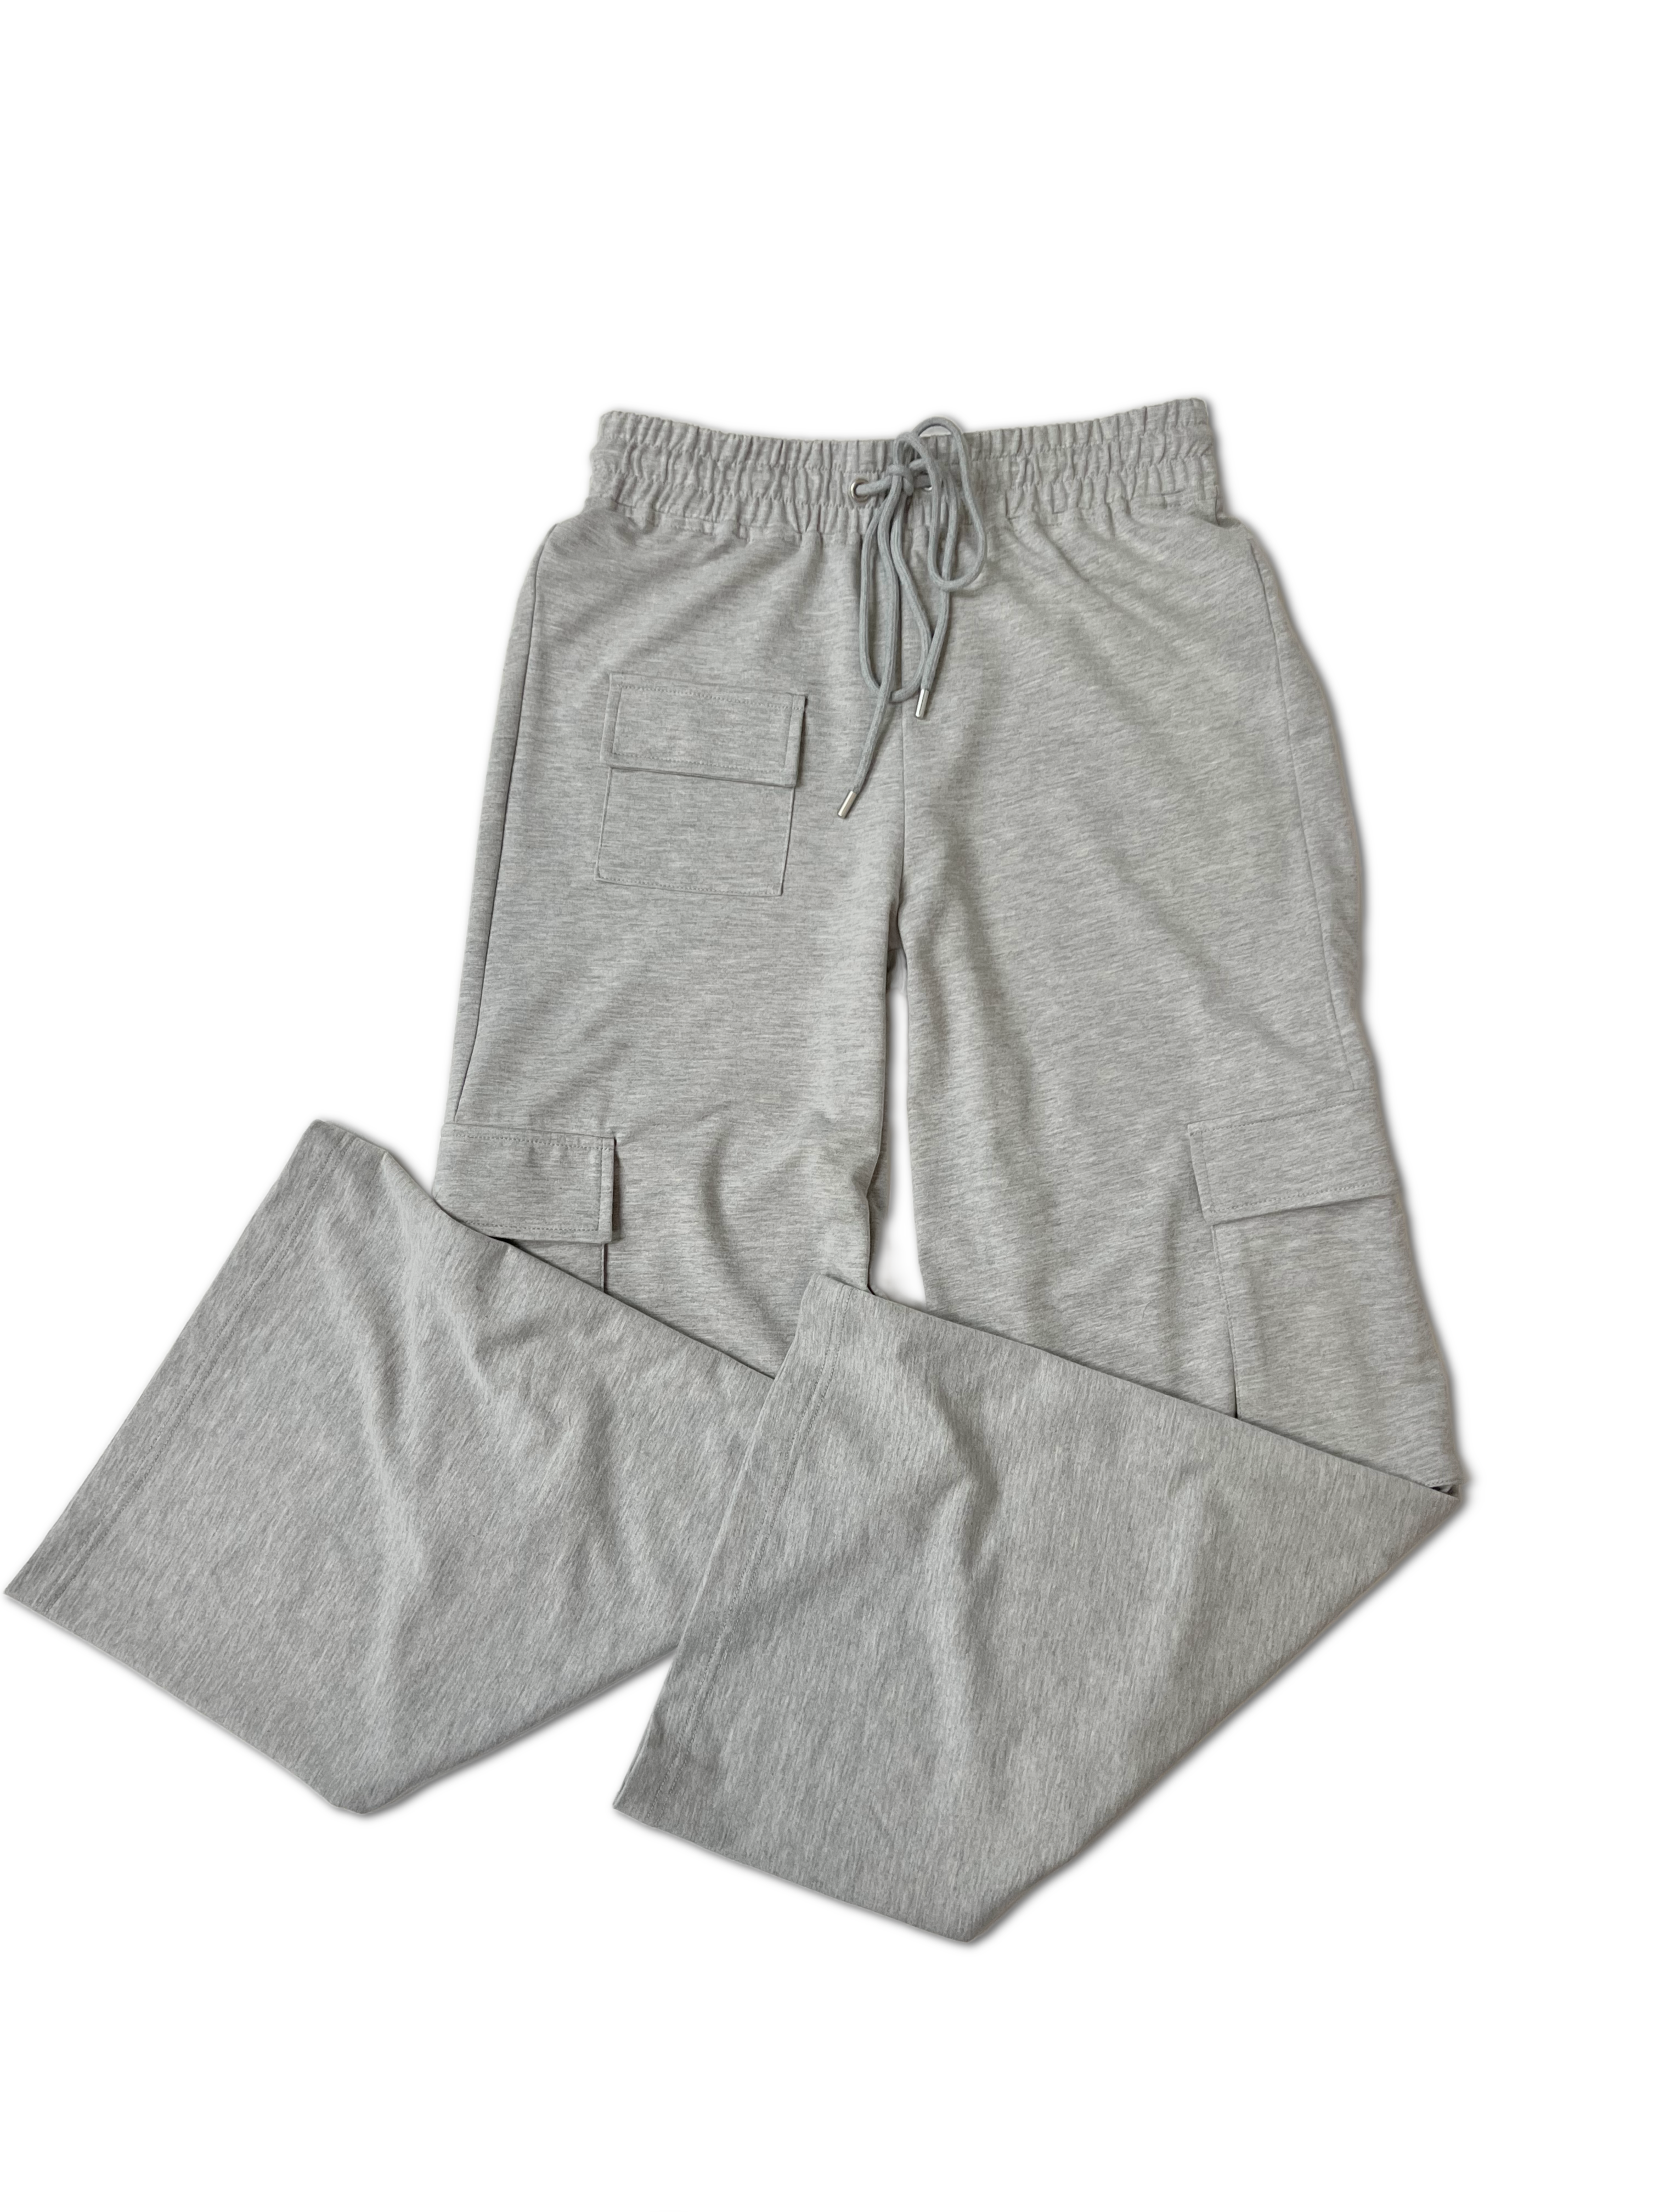 Casual Trend - Knit Cargo Pants-Boutique Simplified-Urban Threadz Boutique, Women's Fashion Boutique in Saugatuck, MI